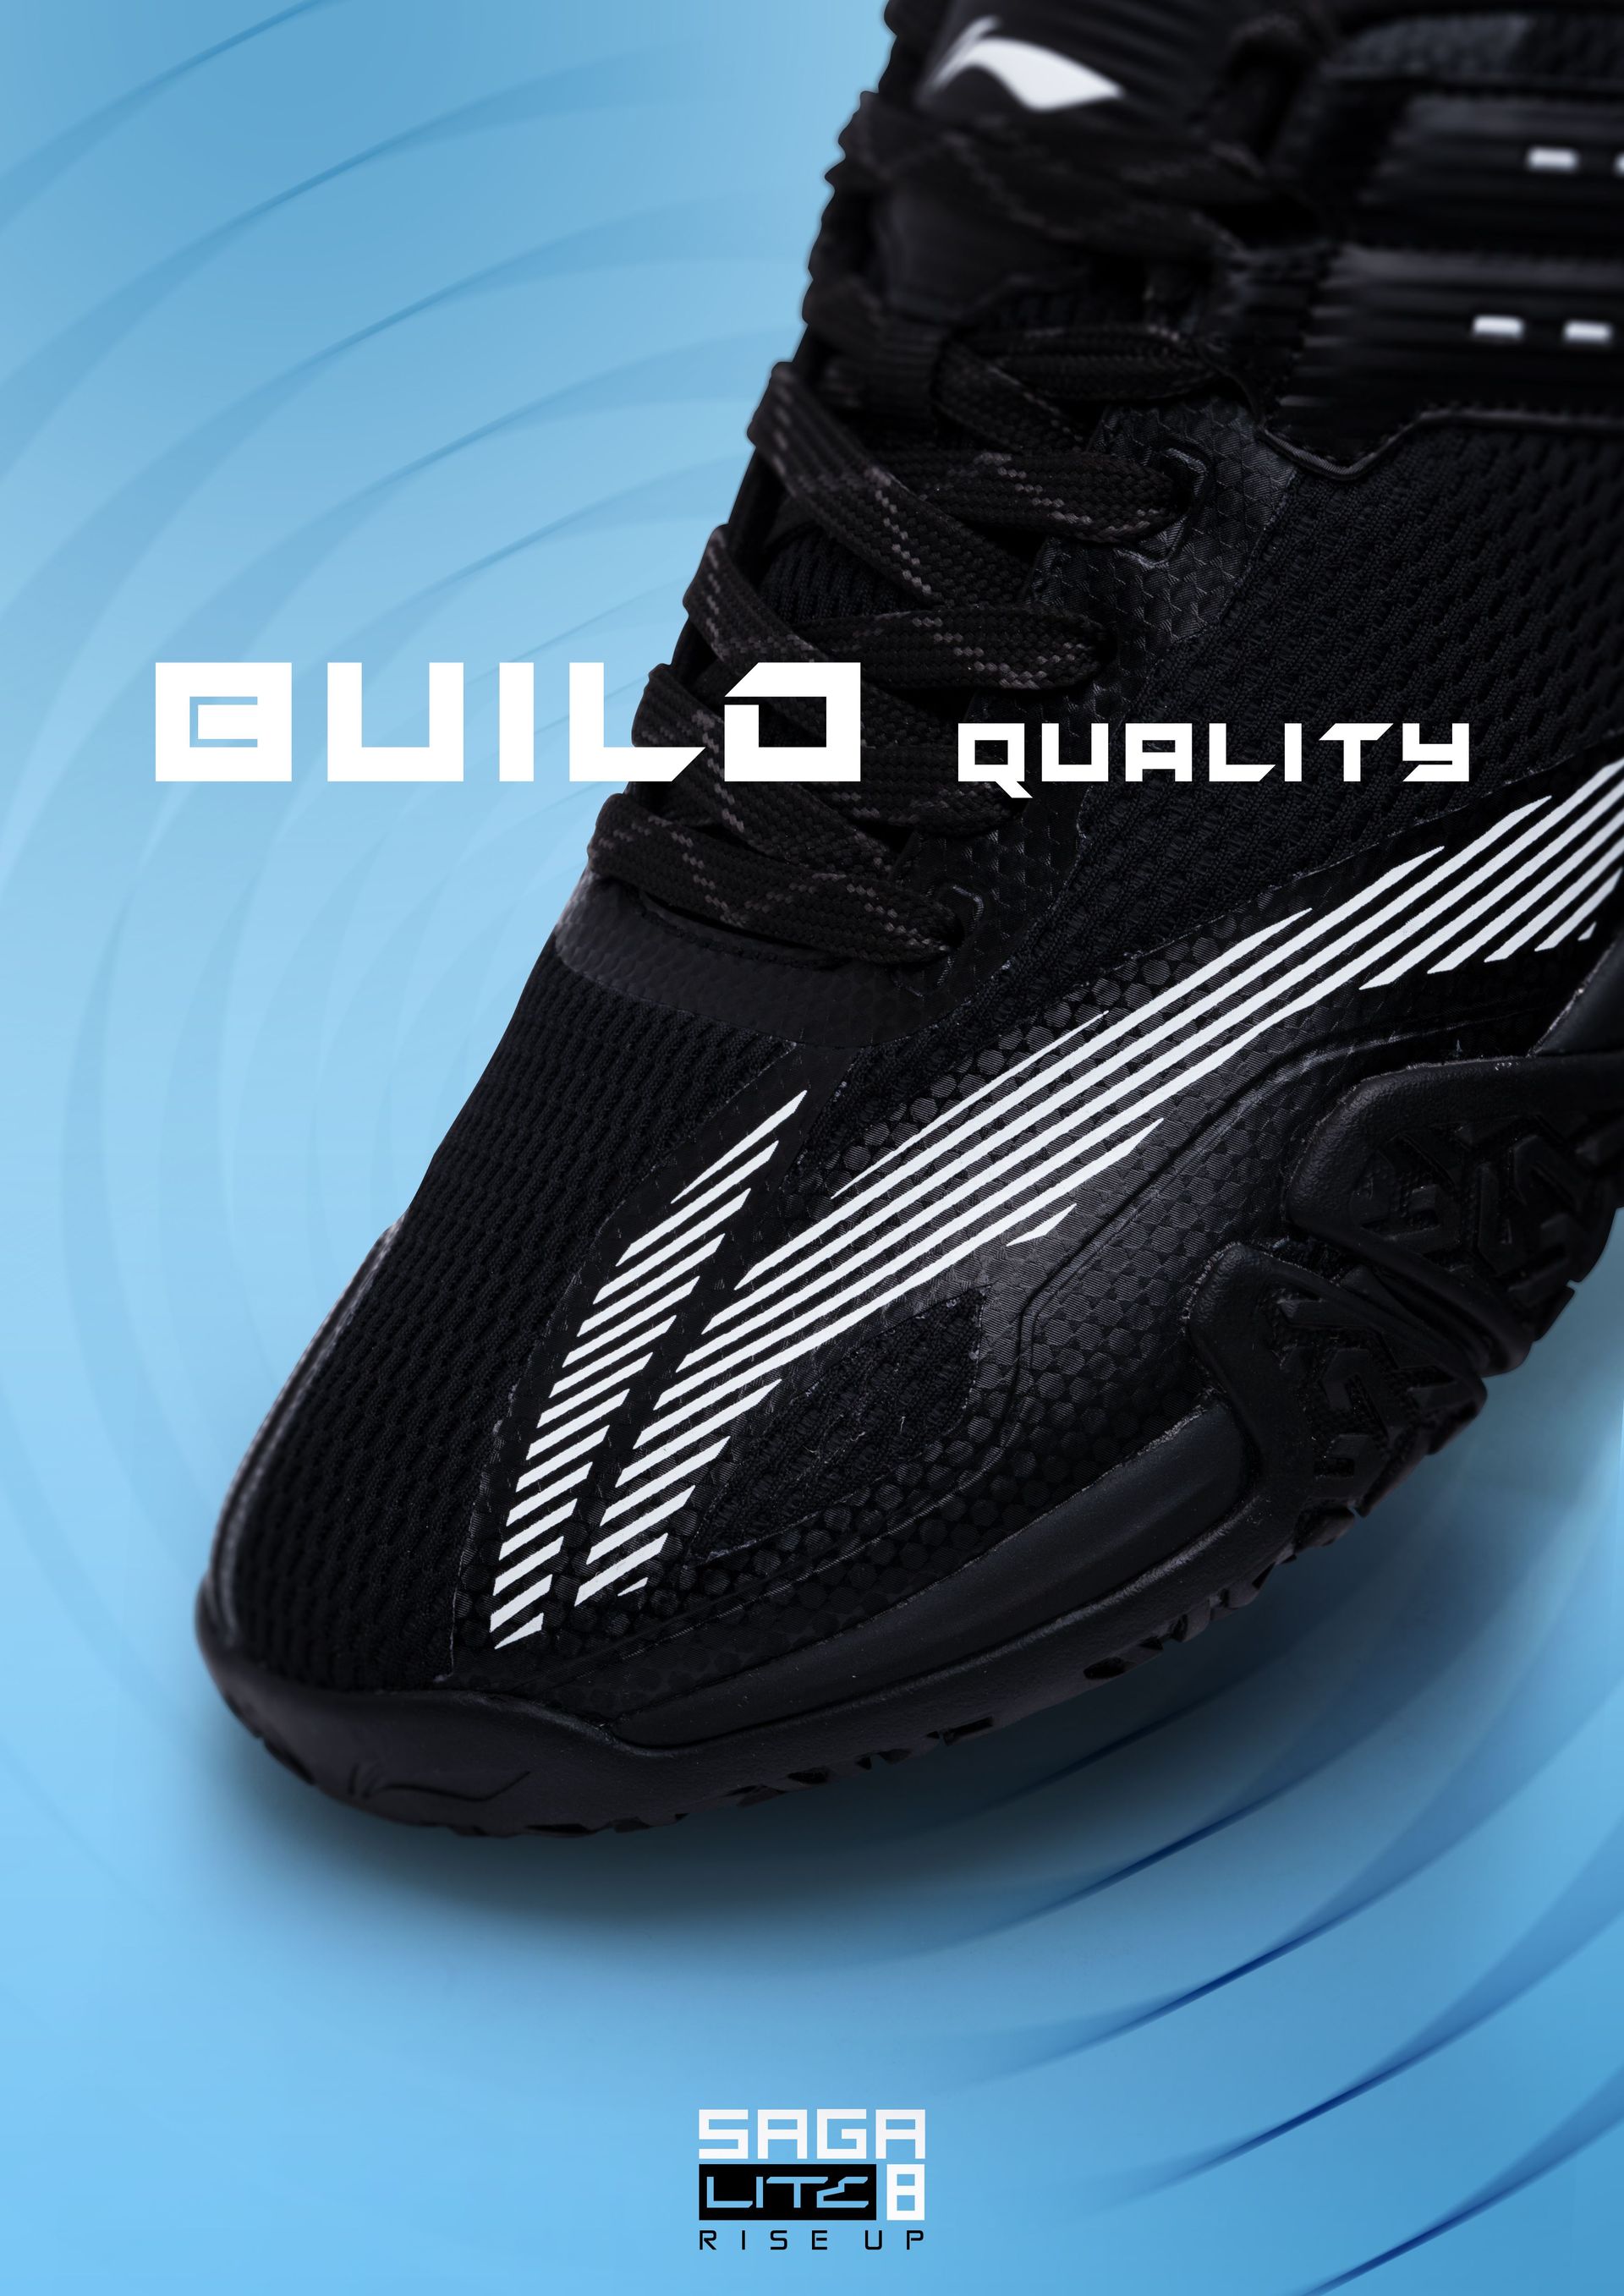 Saga Lite 8 - Badminton Shoe - Build Quality